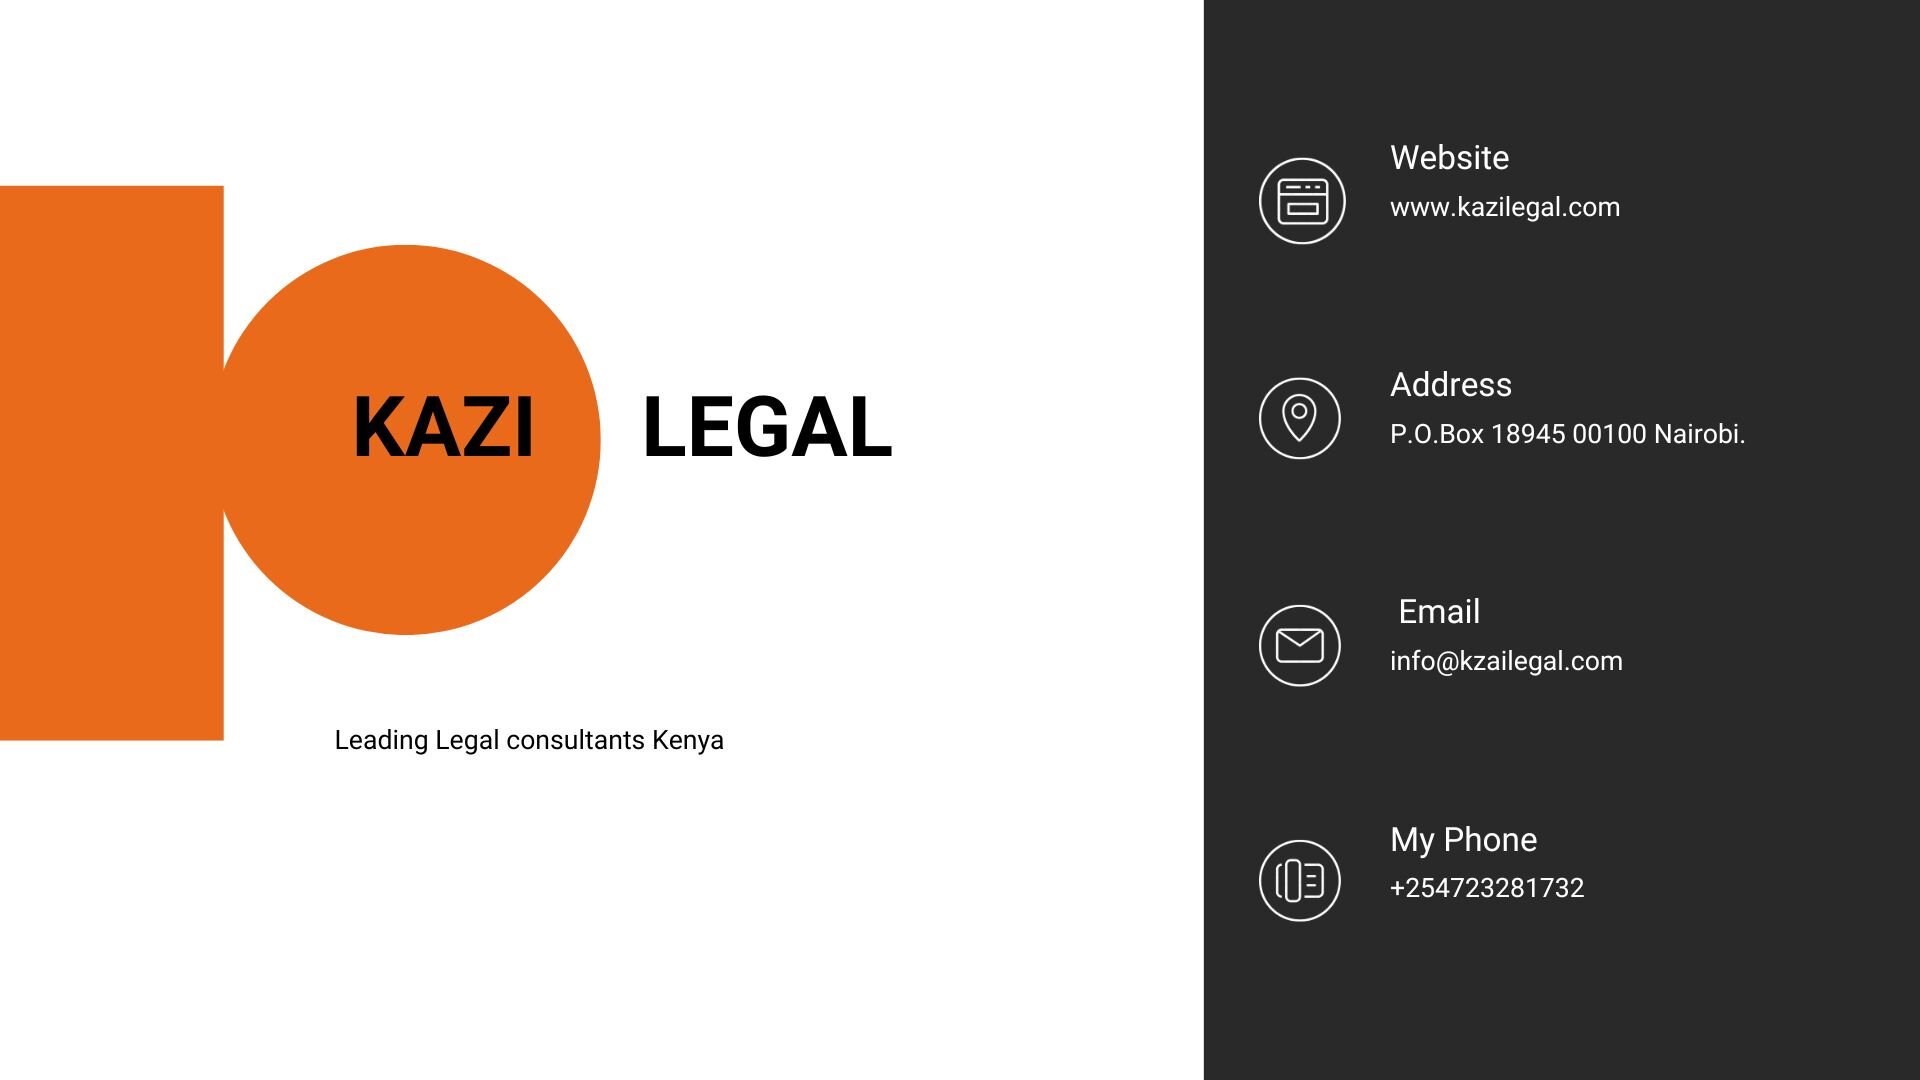 Kazi Legal cover photo